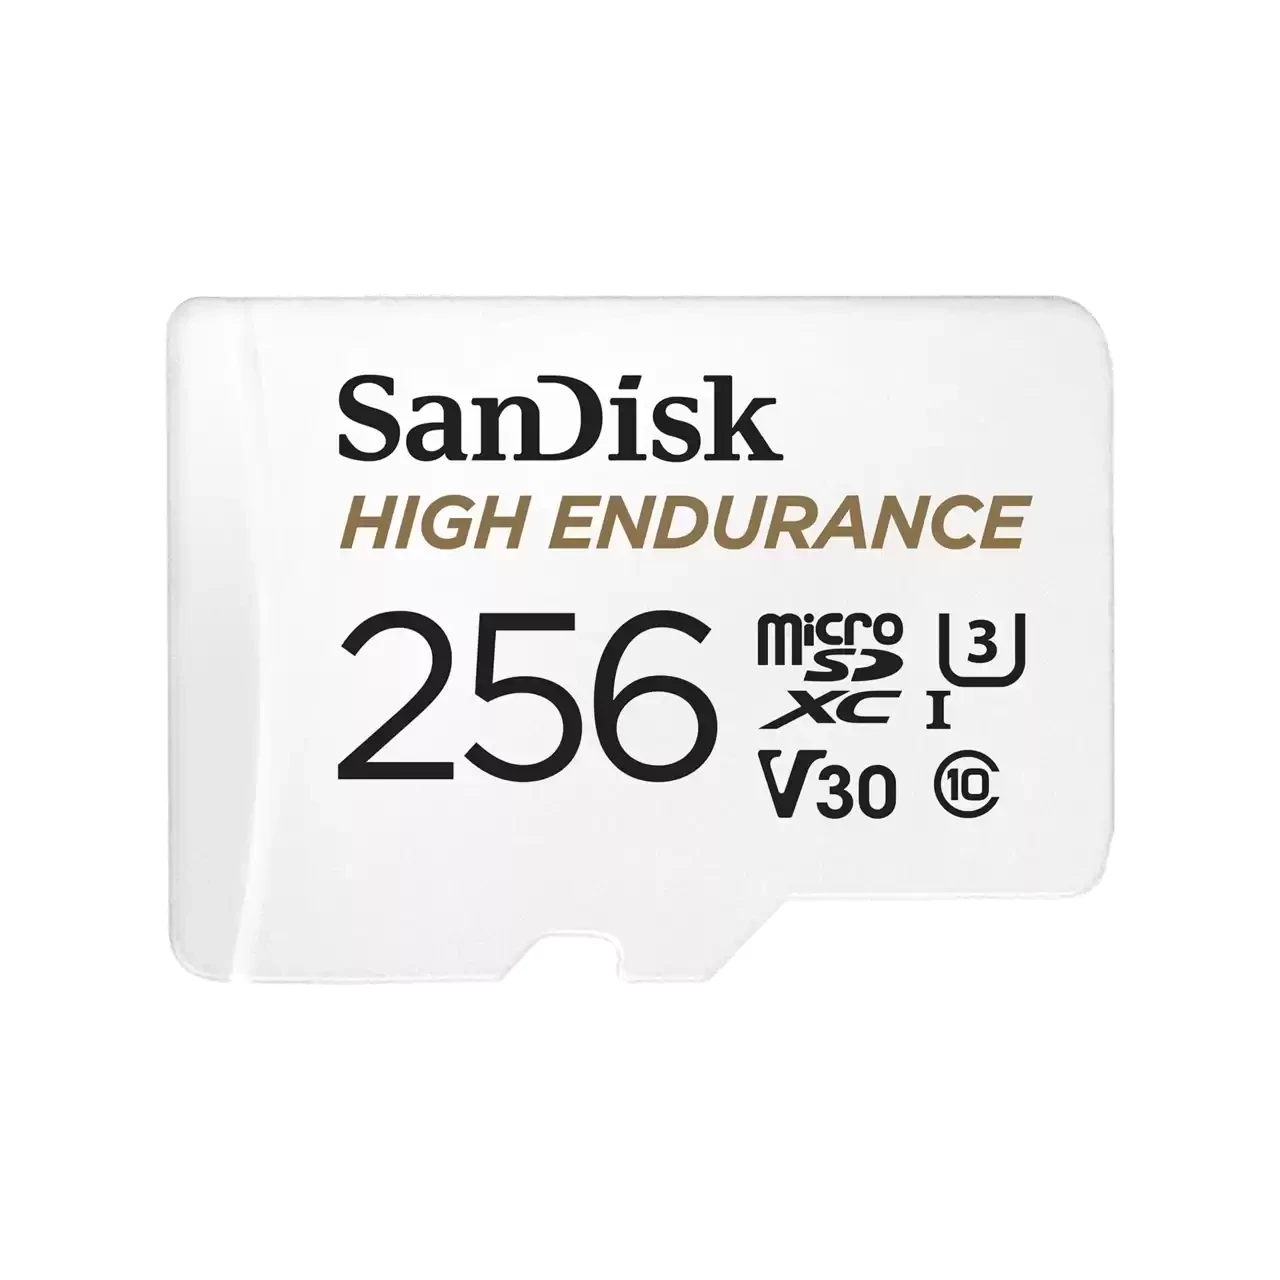 Sandisk High Endurance 256Gb MicroSDXC UHS-I Memory Card